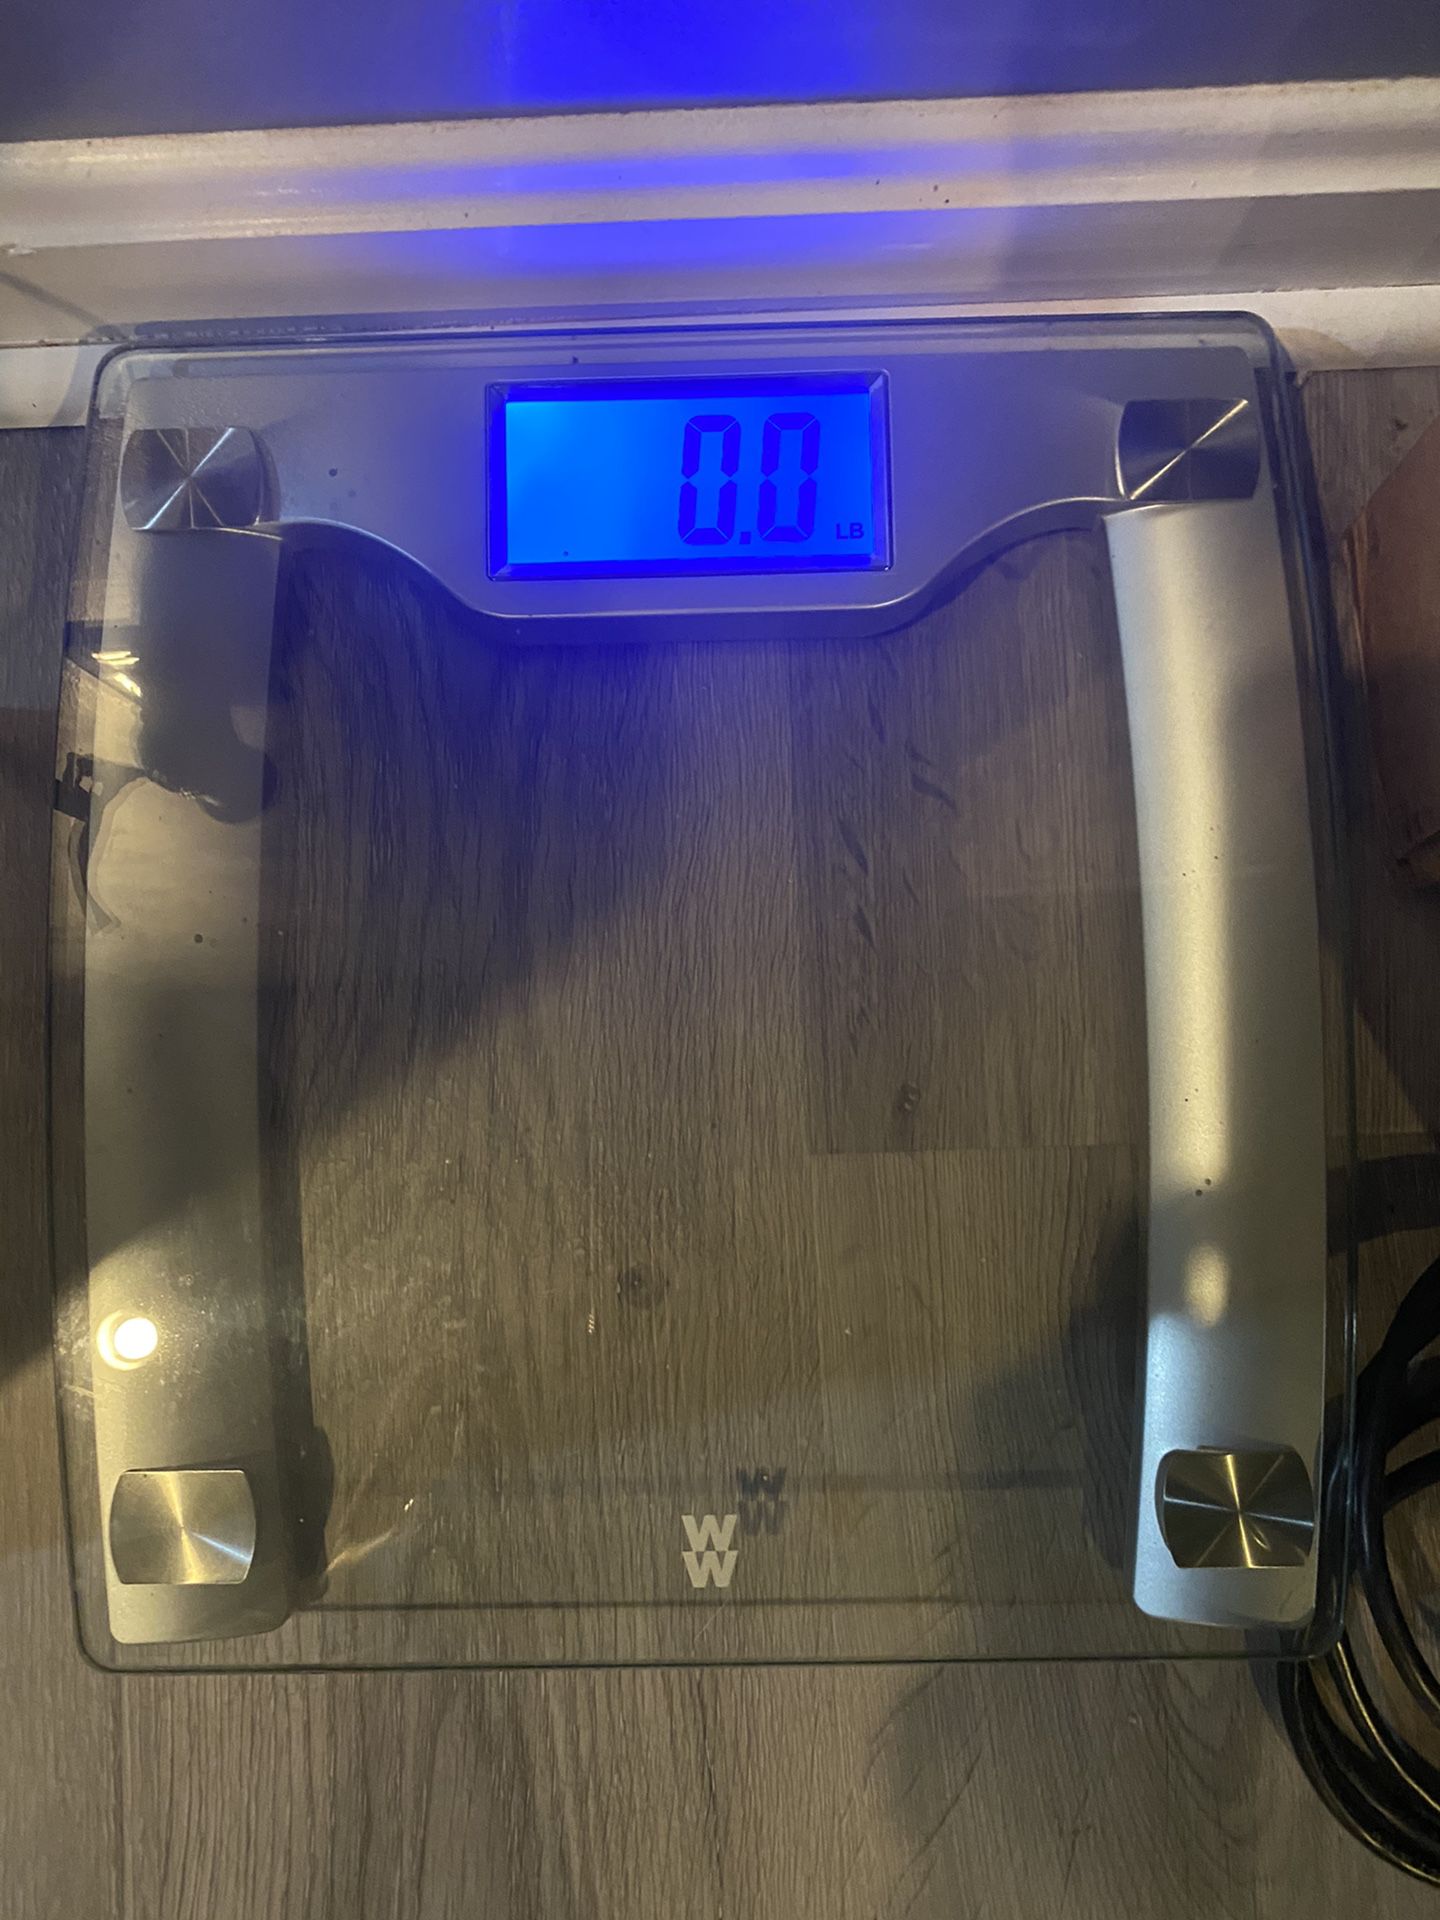 Weight Watchers glass scale